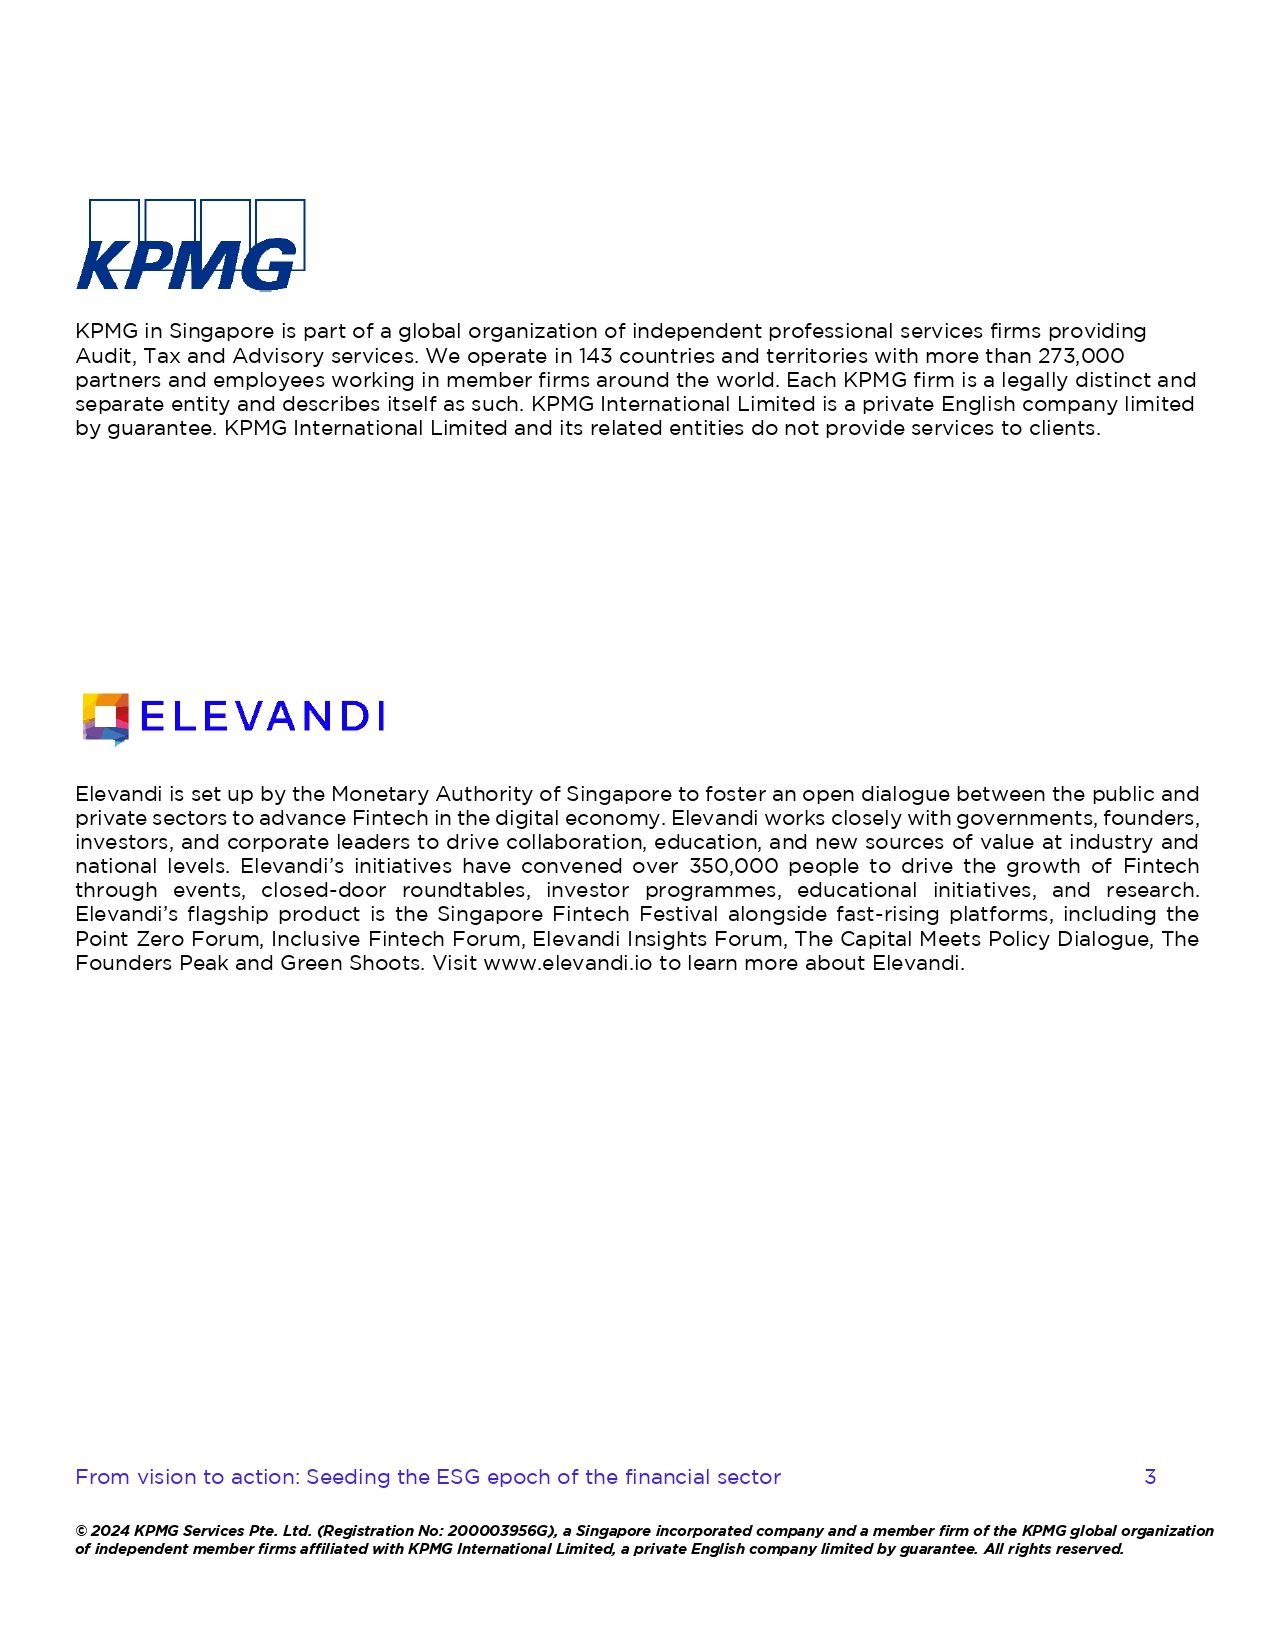 Seeding-the-esg-epoch-of-the-financial-sector-KPMGxElevandi-3